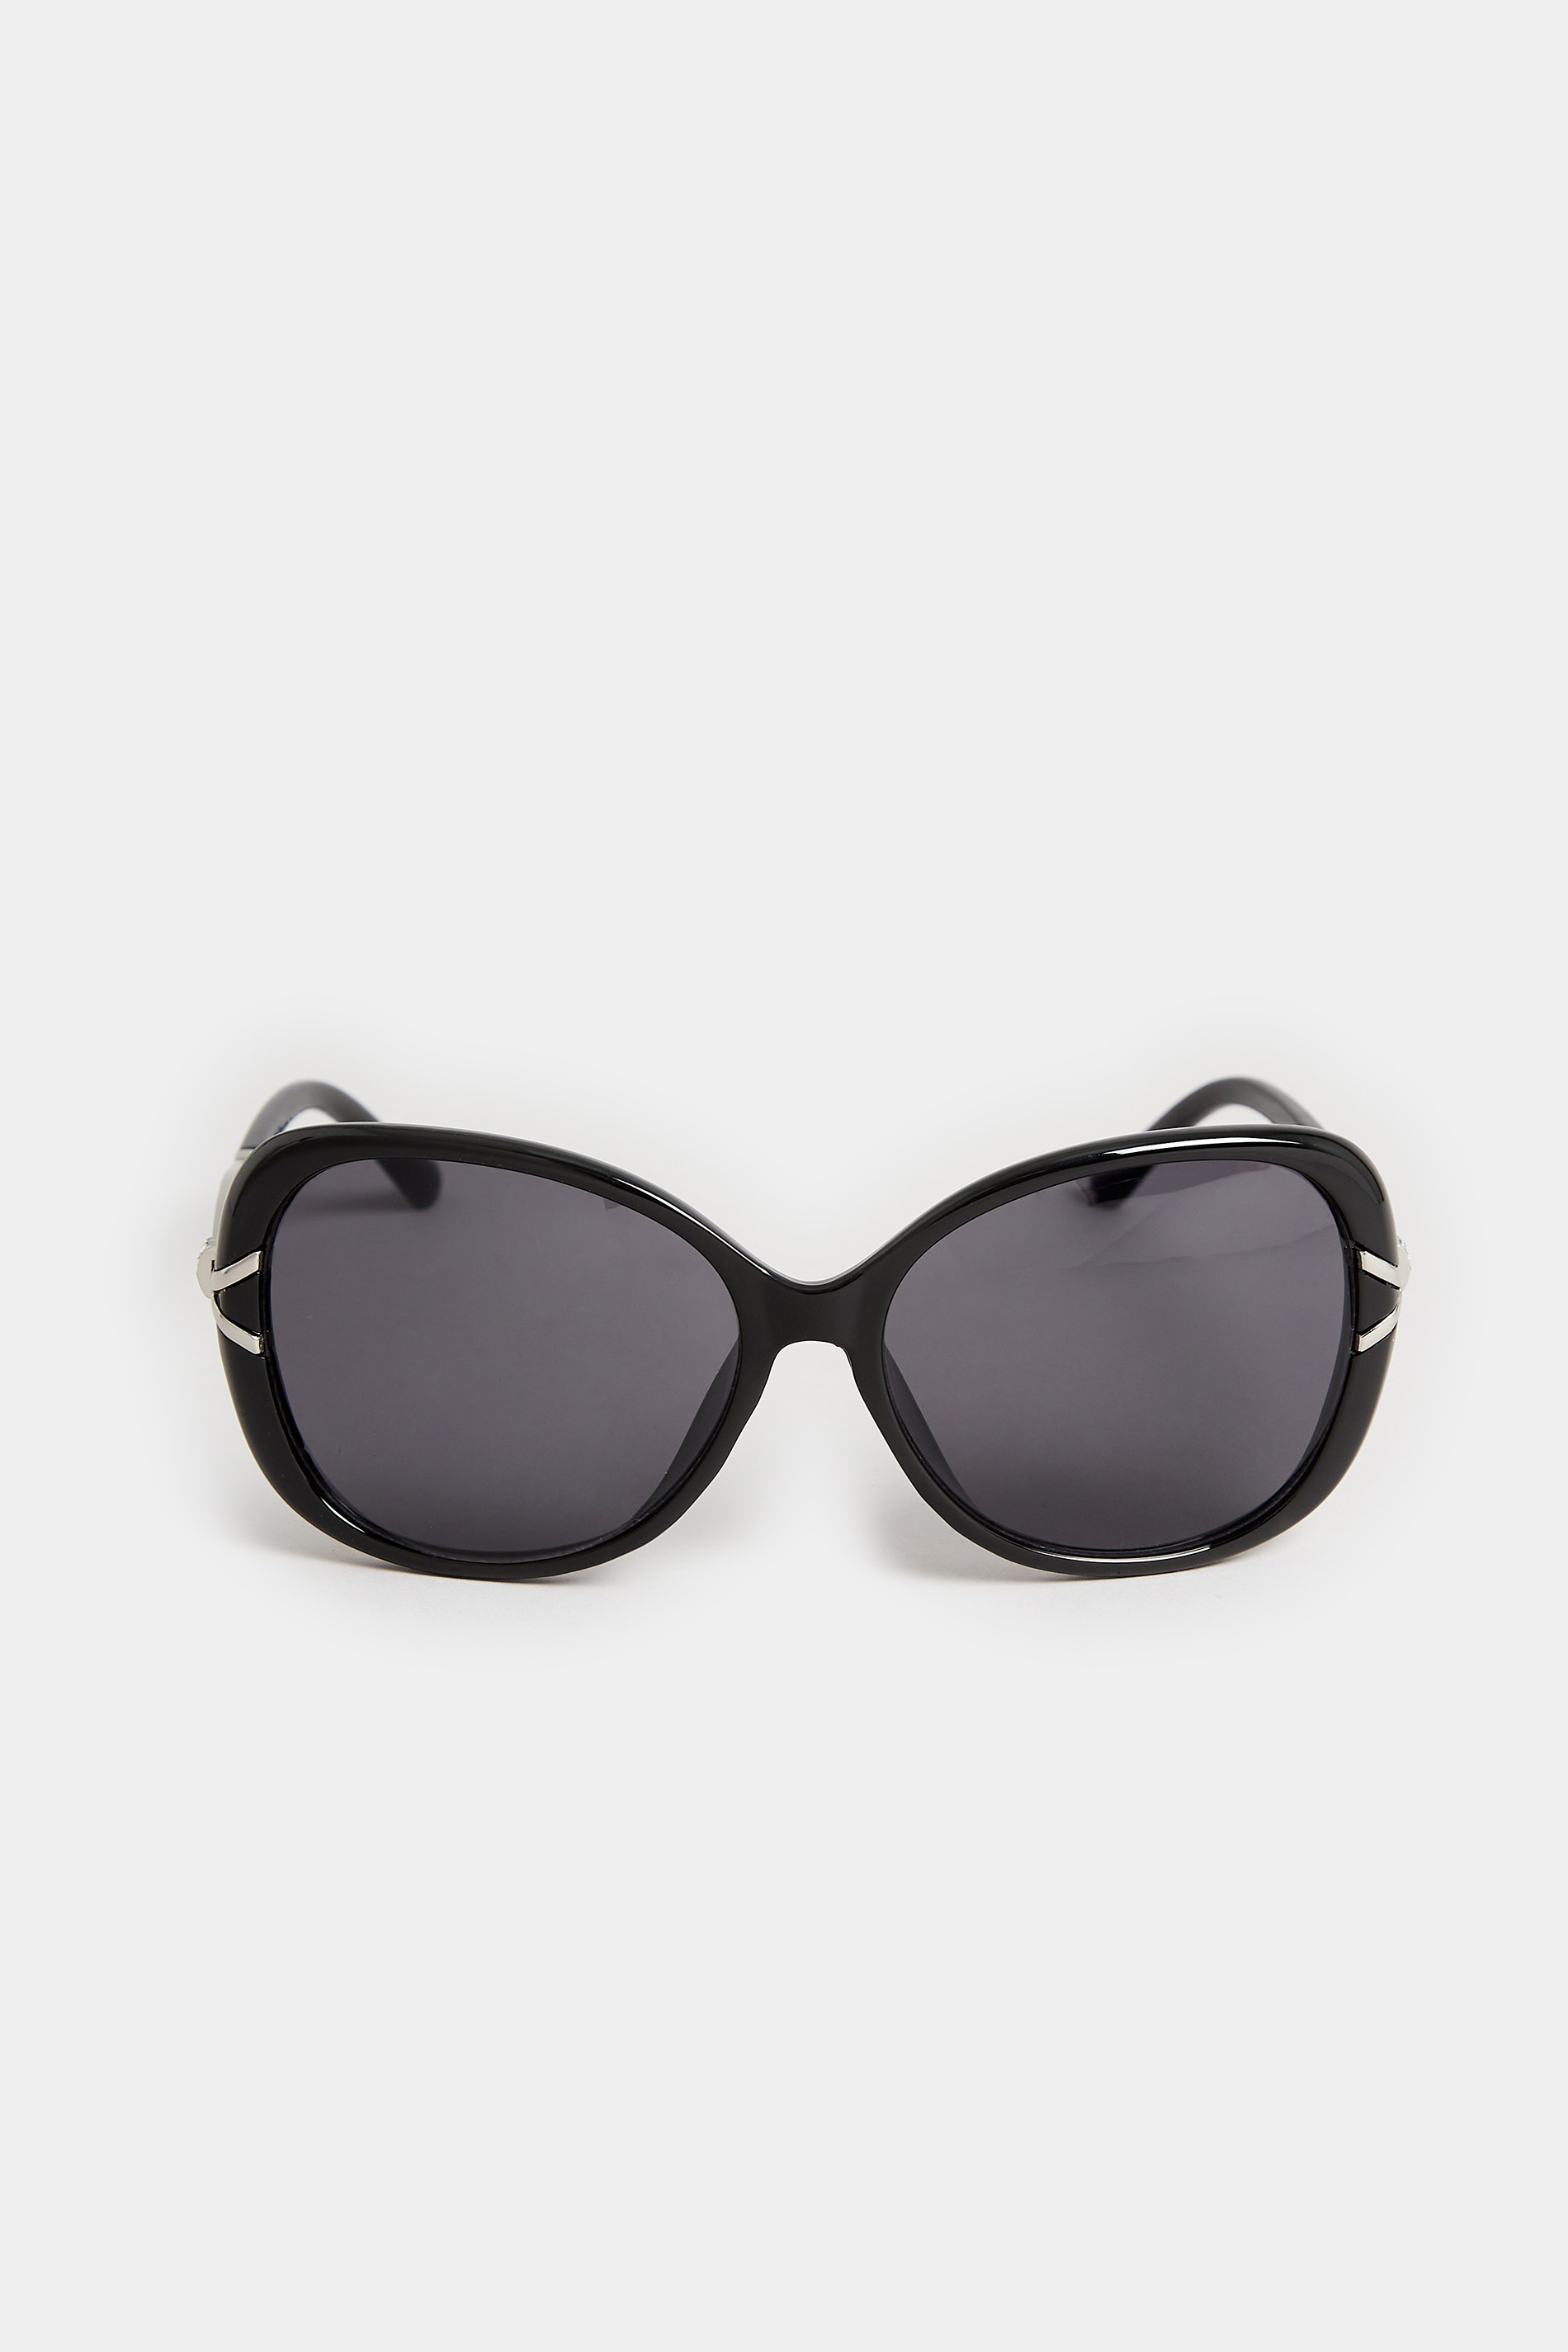 Yours Plus Size Black Oversized Diamante Knot Sunglasses Size One Size | Women's Plus Size and Curve Fashion